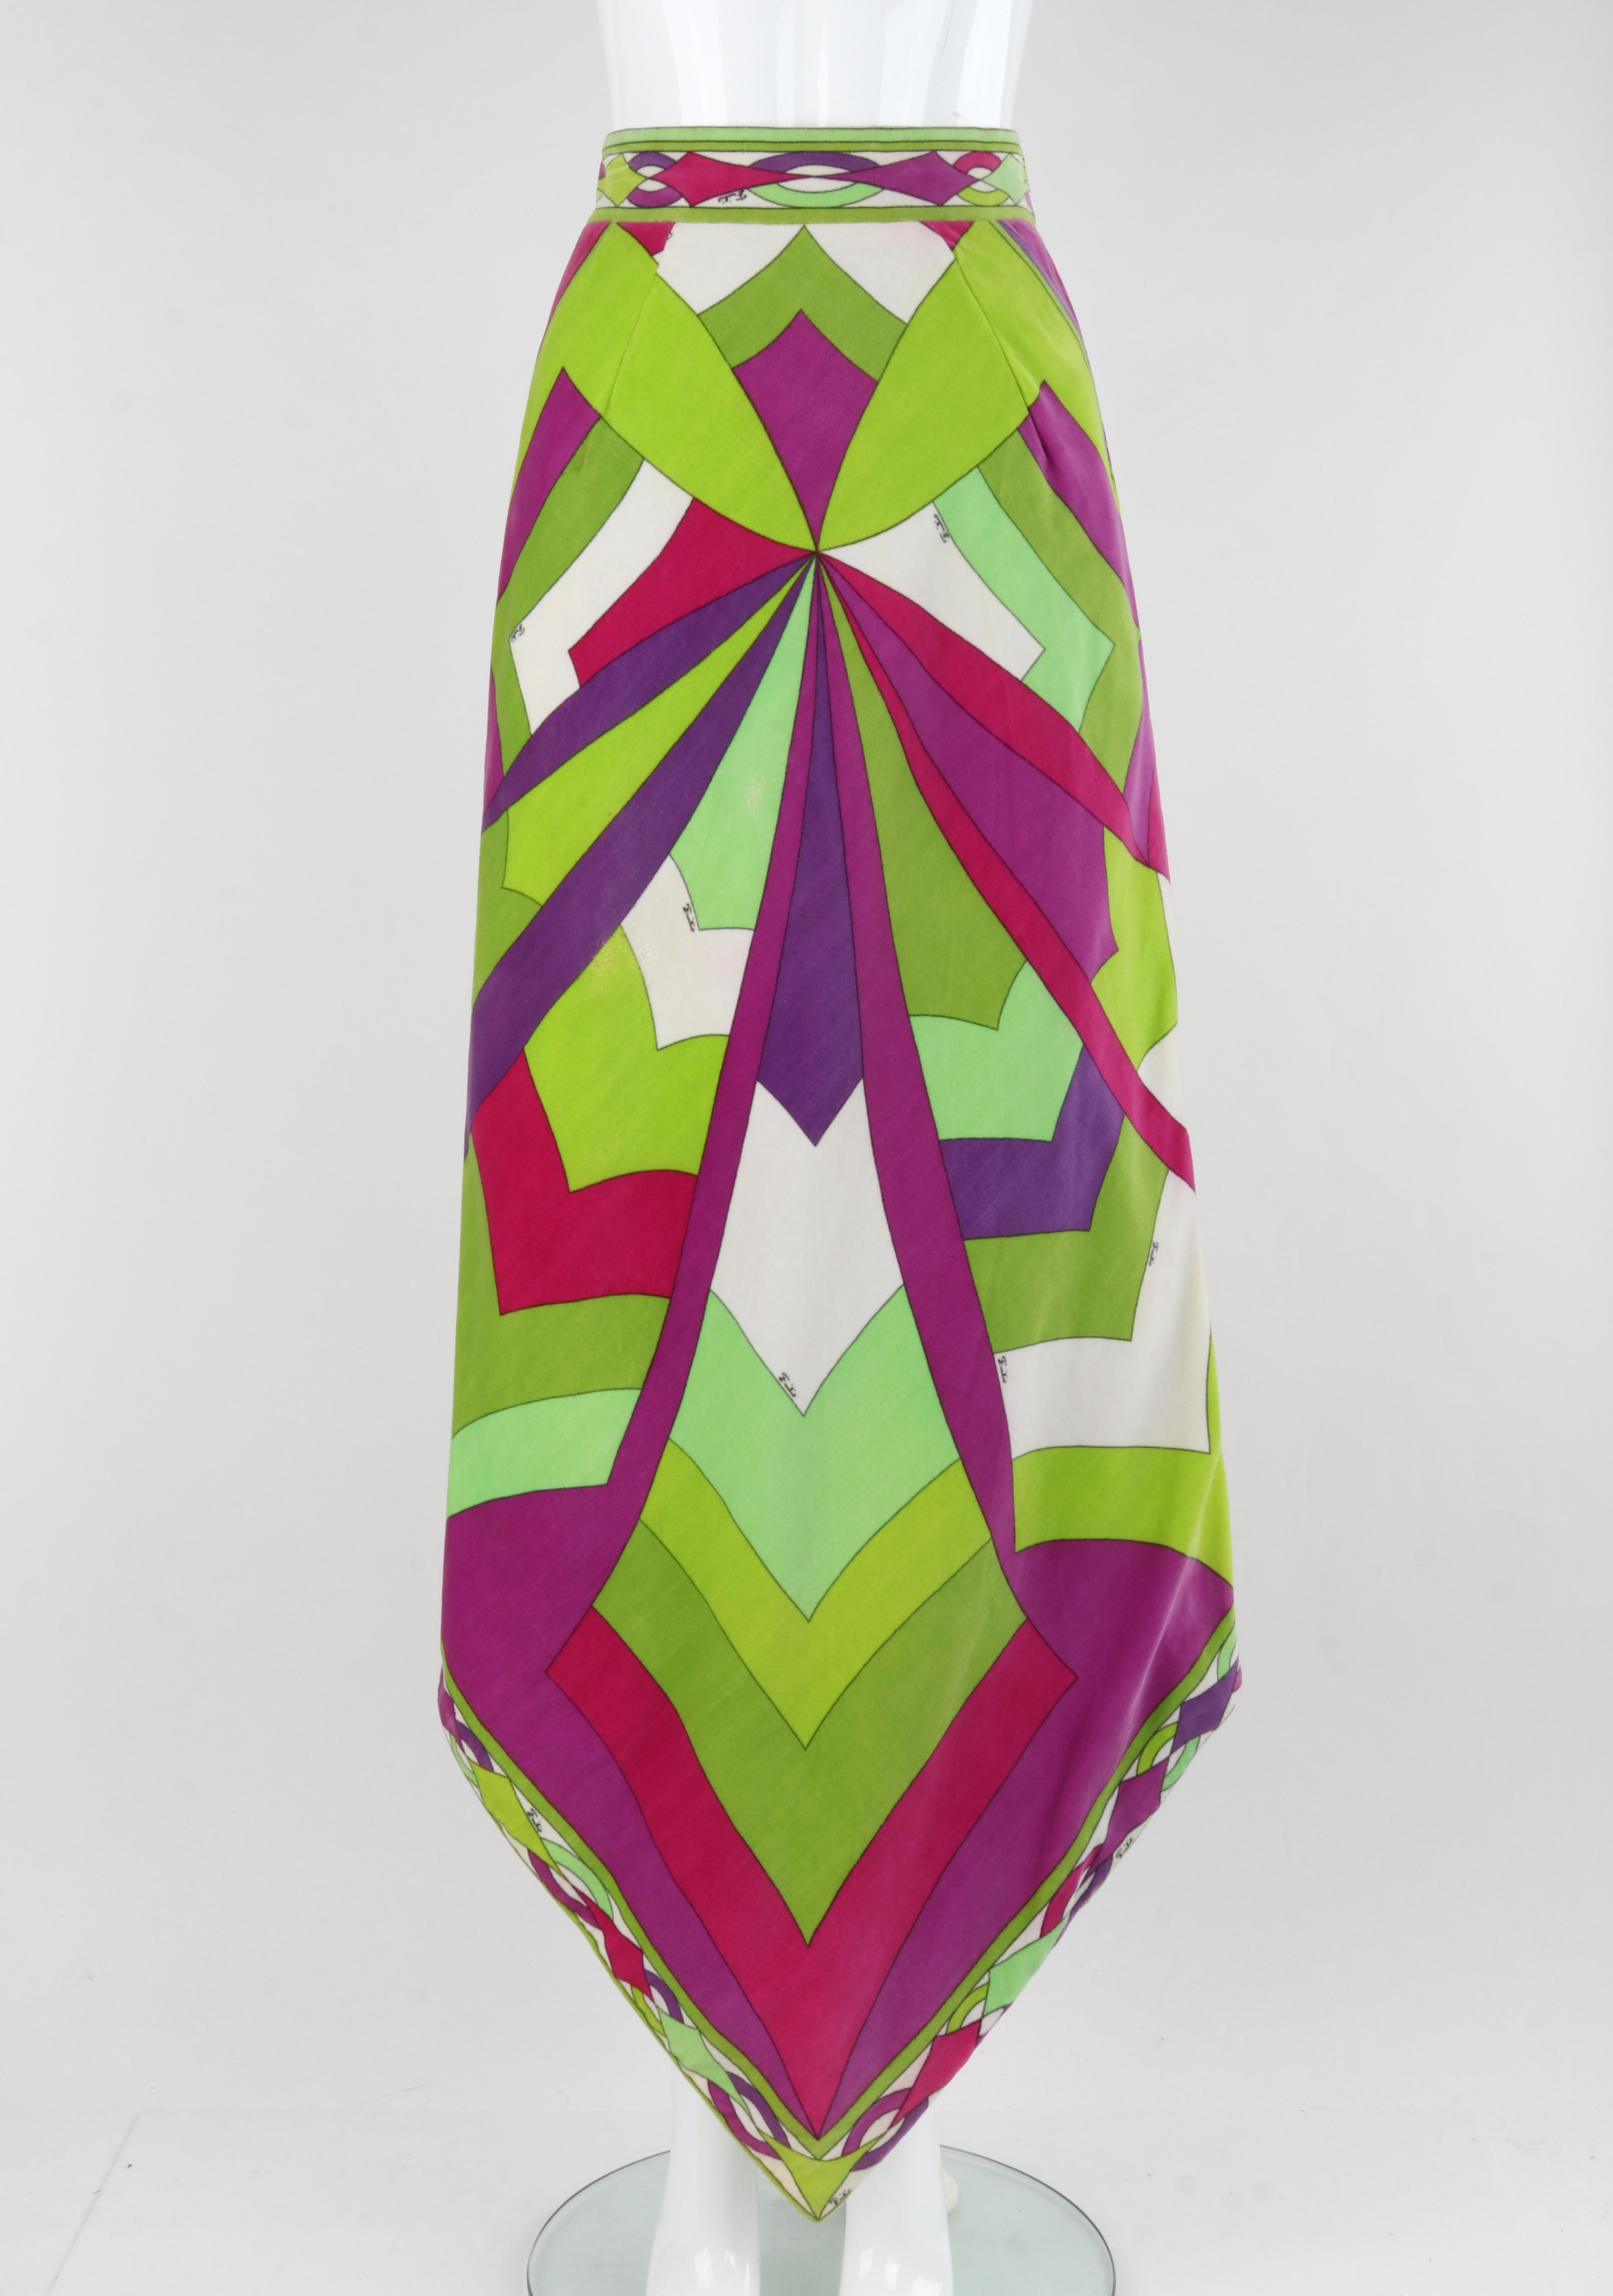 EMILIO PUCCI c.1969 Vtg Multicolor Velvet Abstract Print Scarf Hem Maxi Skirt

Brand / Manufacturer: Emilio Pucci For Saks Fifth Avenue
Circa: 1969
Designer: Emilio Pucci
Style: Maxi Skirt
Color(s): Shades of Green, Purple, Pink, White
Lined: